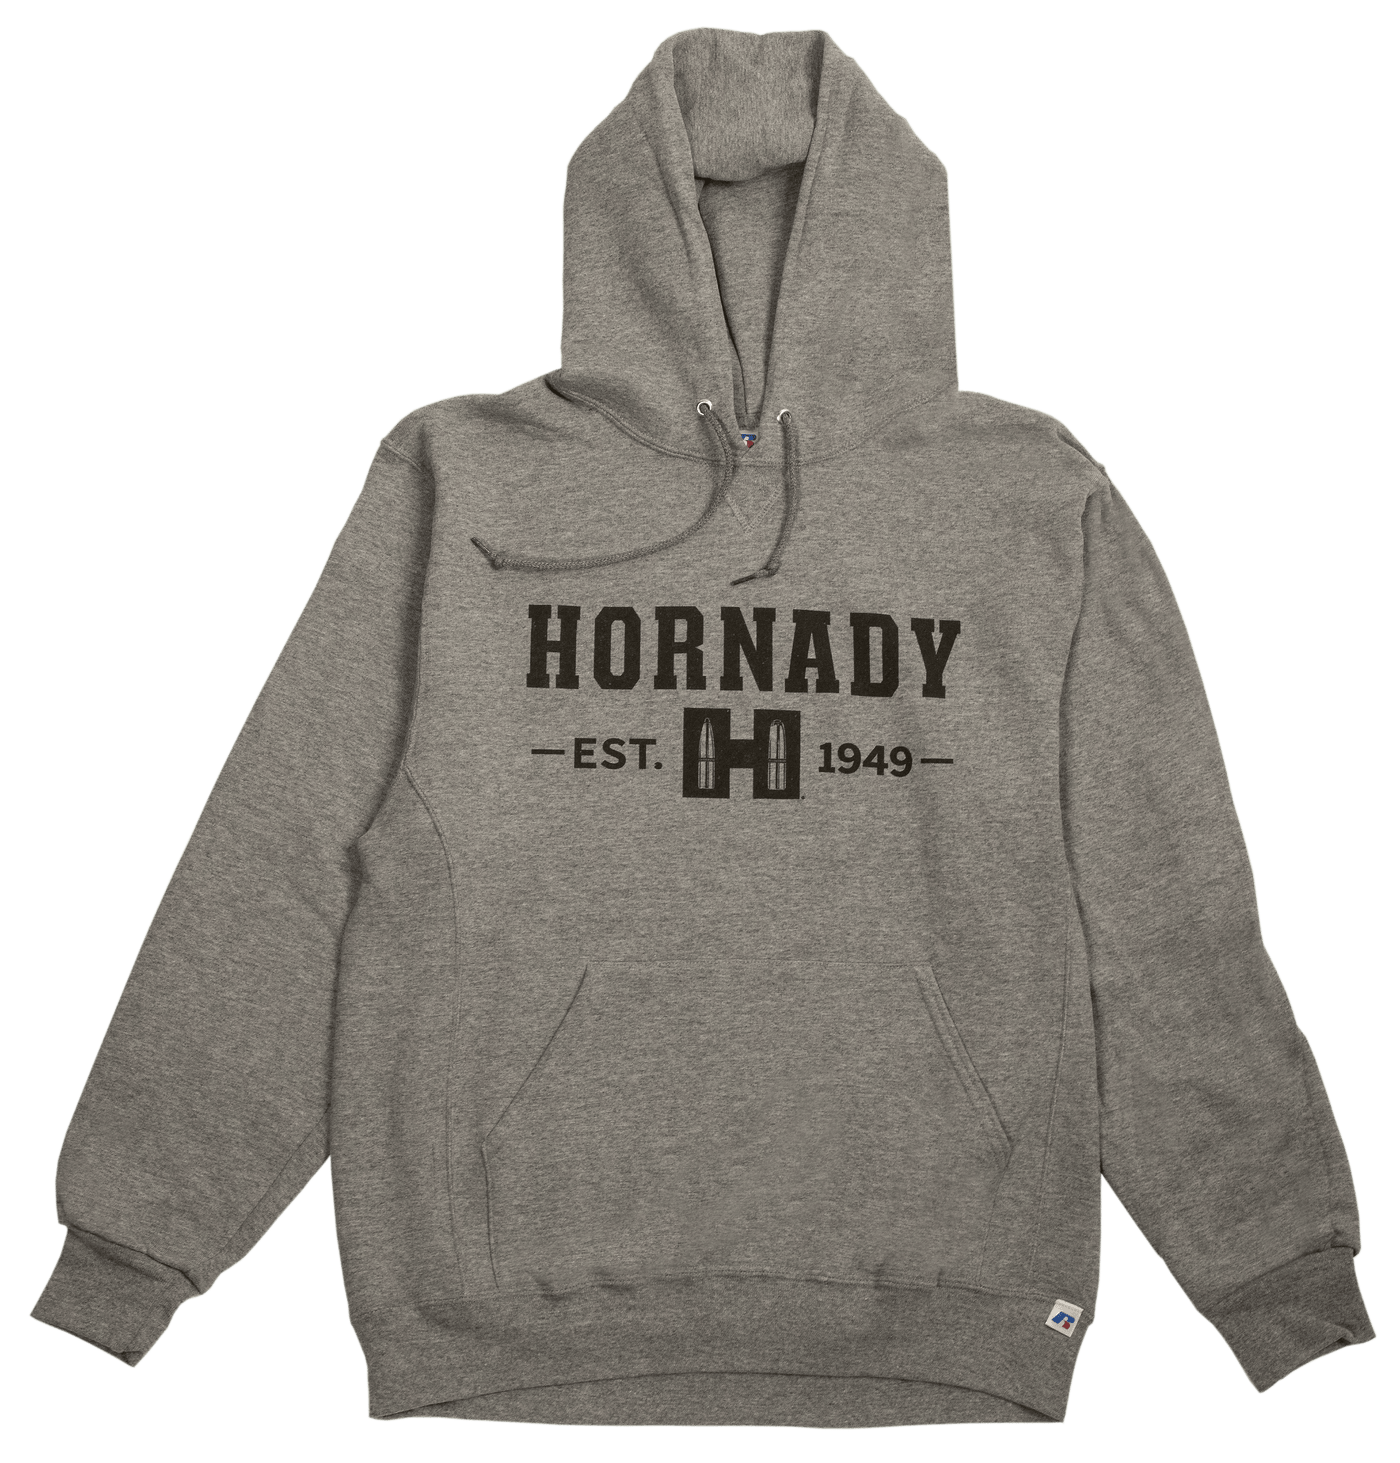 Hornady Hornady Hornady Hoodie, Horn 99595xxxl  Hornady Gray  Hoodie 3x Accessories